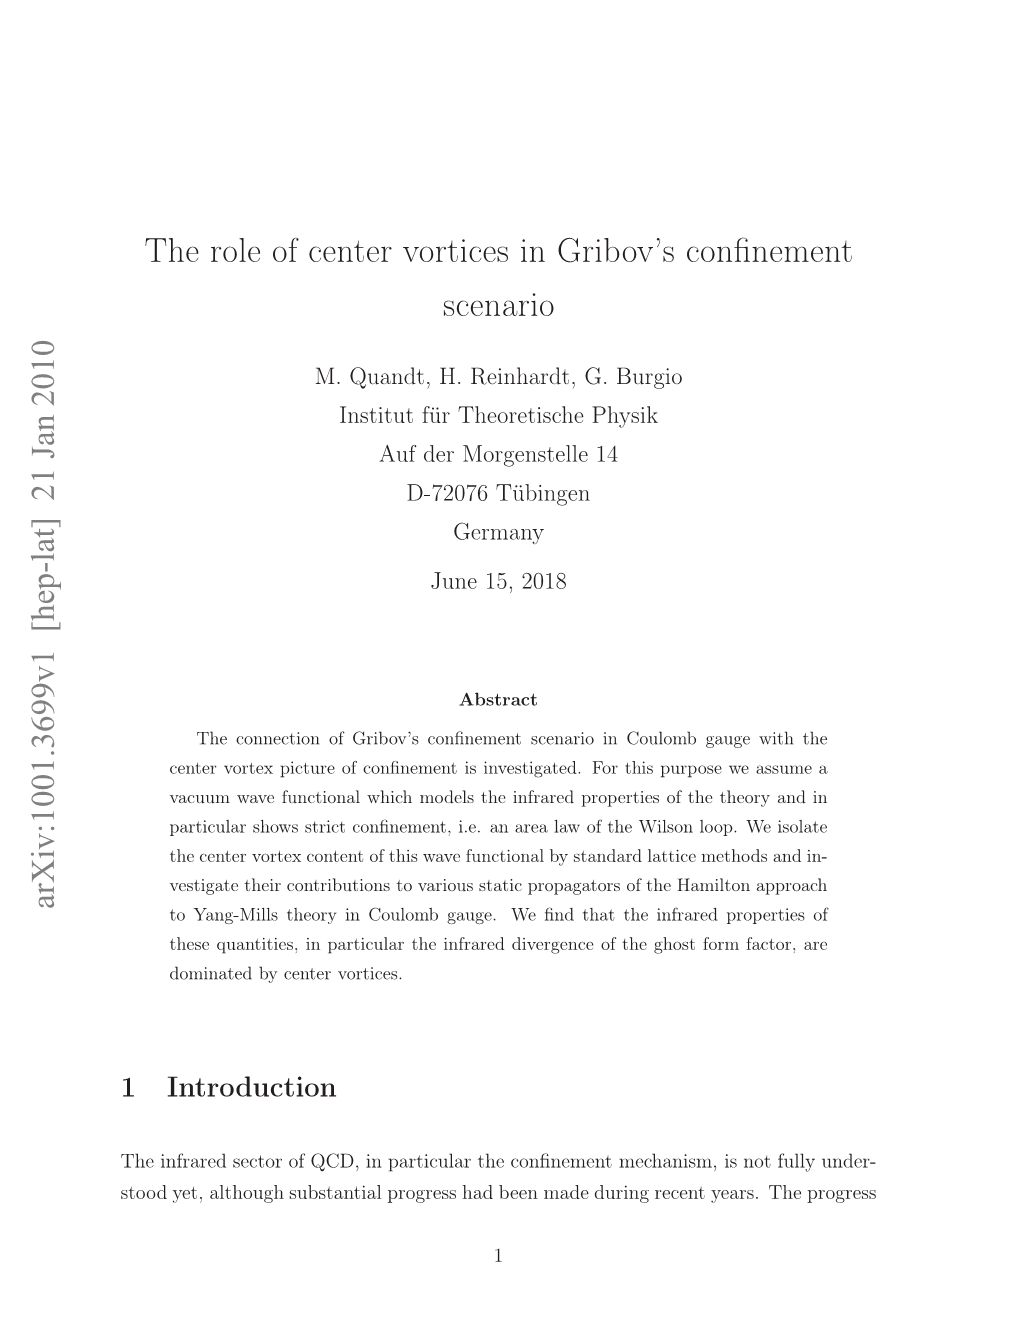 The Role of Center Vortices in Gribov's Confinement Scenario